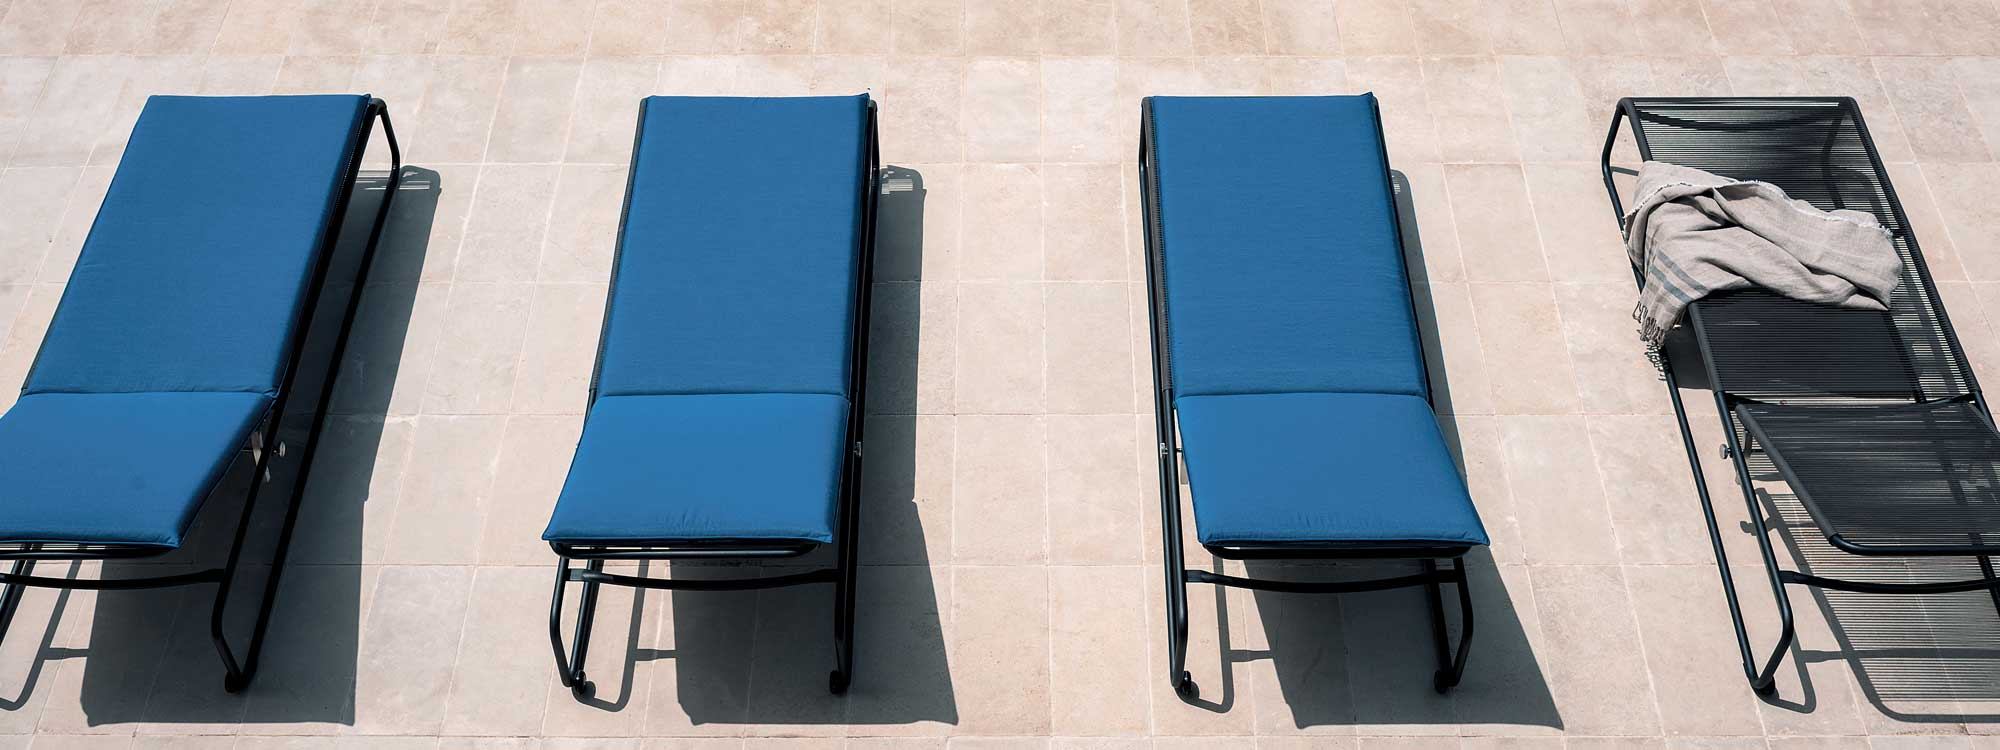 Image of row of Harp modern sun loungers with black tubular frames and blue cushions by RODA, on sunny terrace